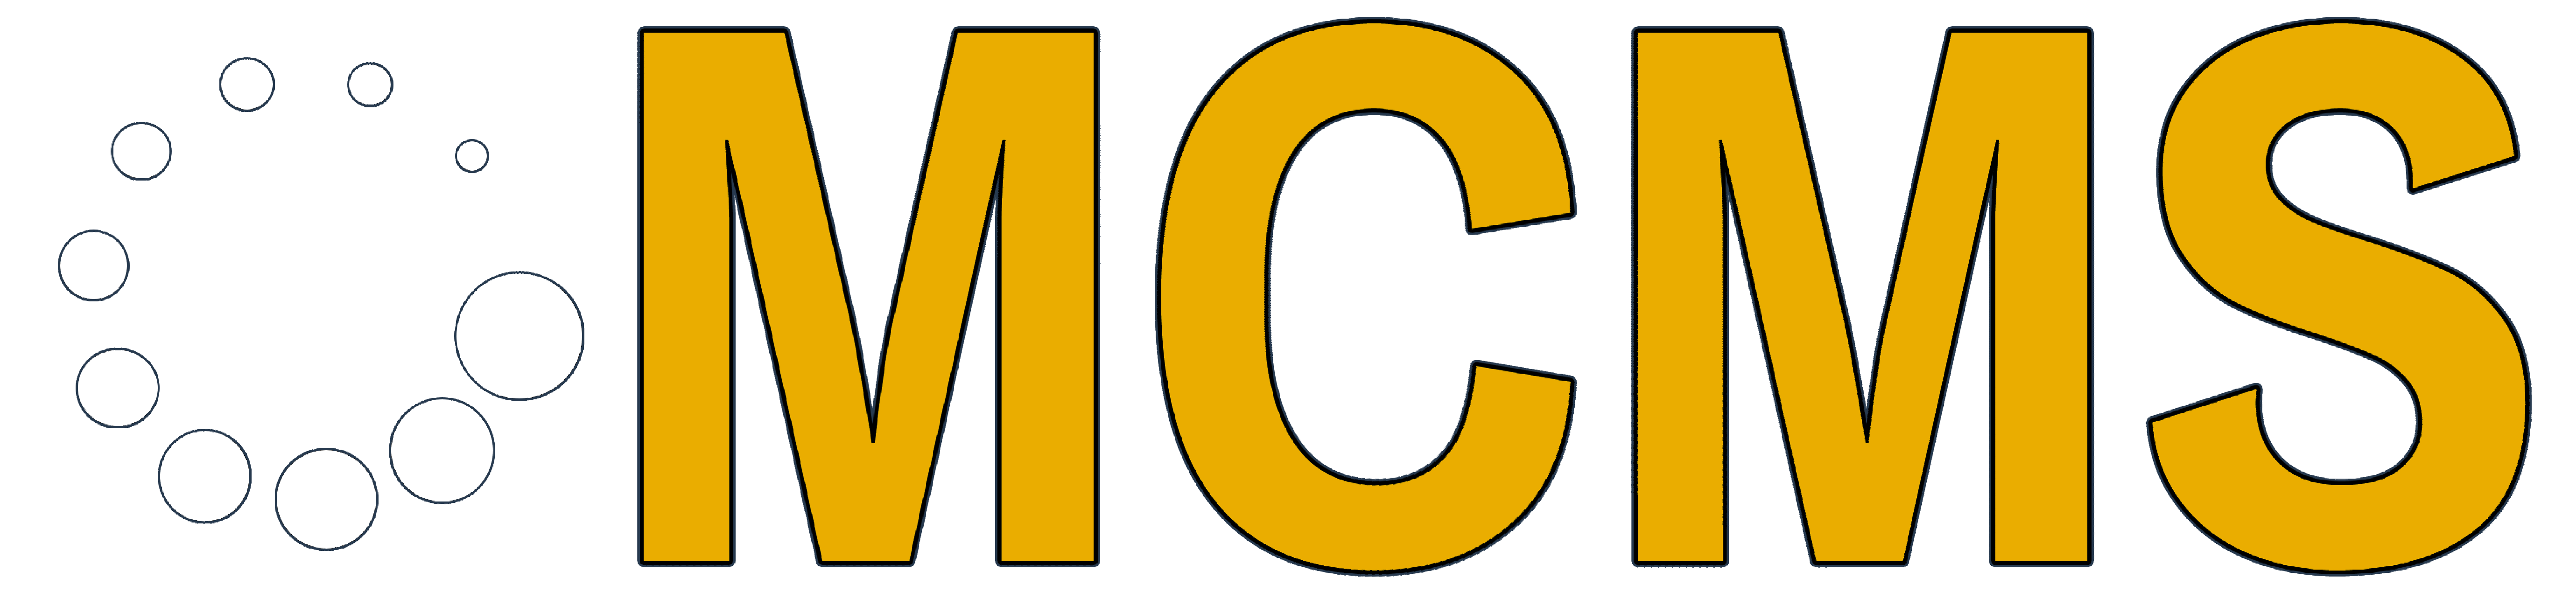 MCMS logo